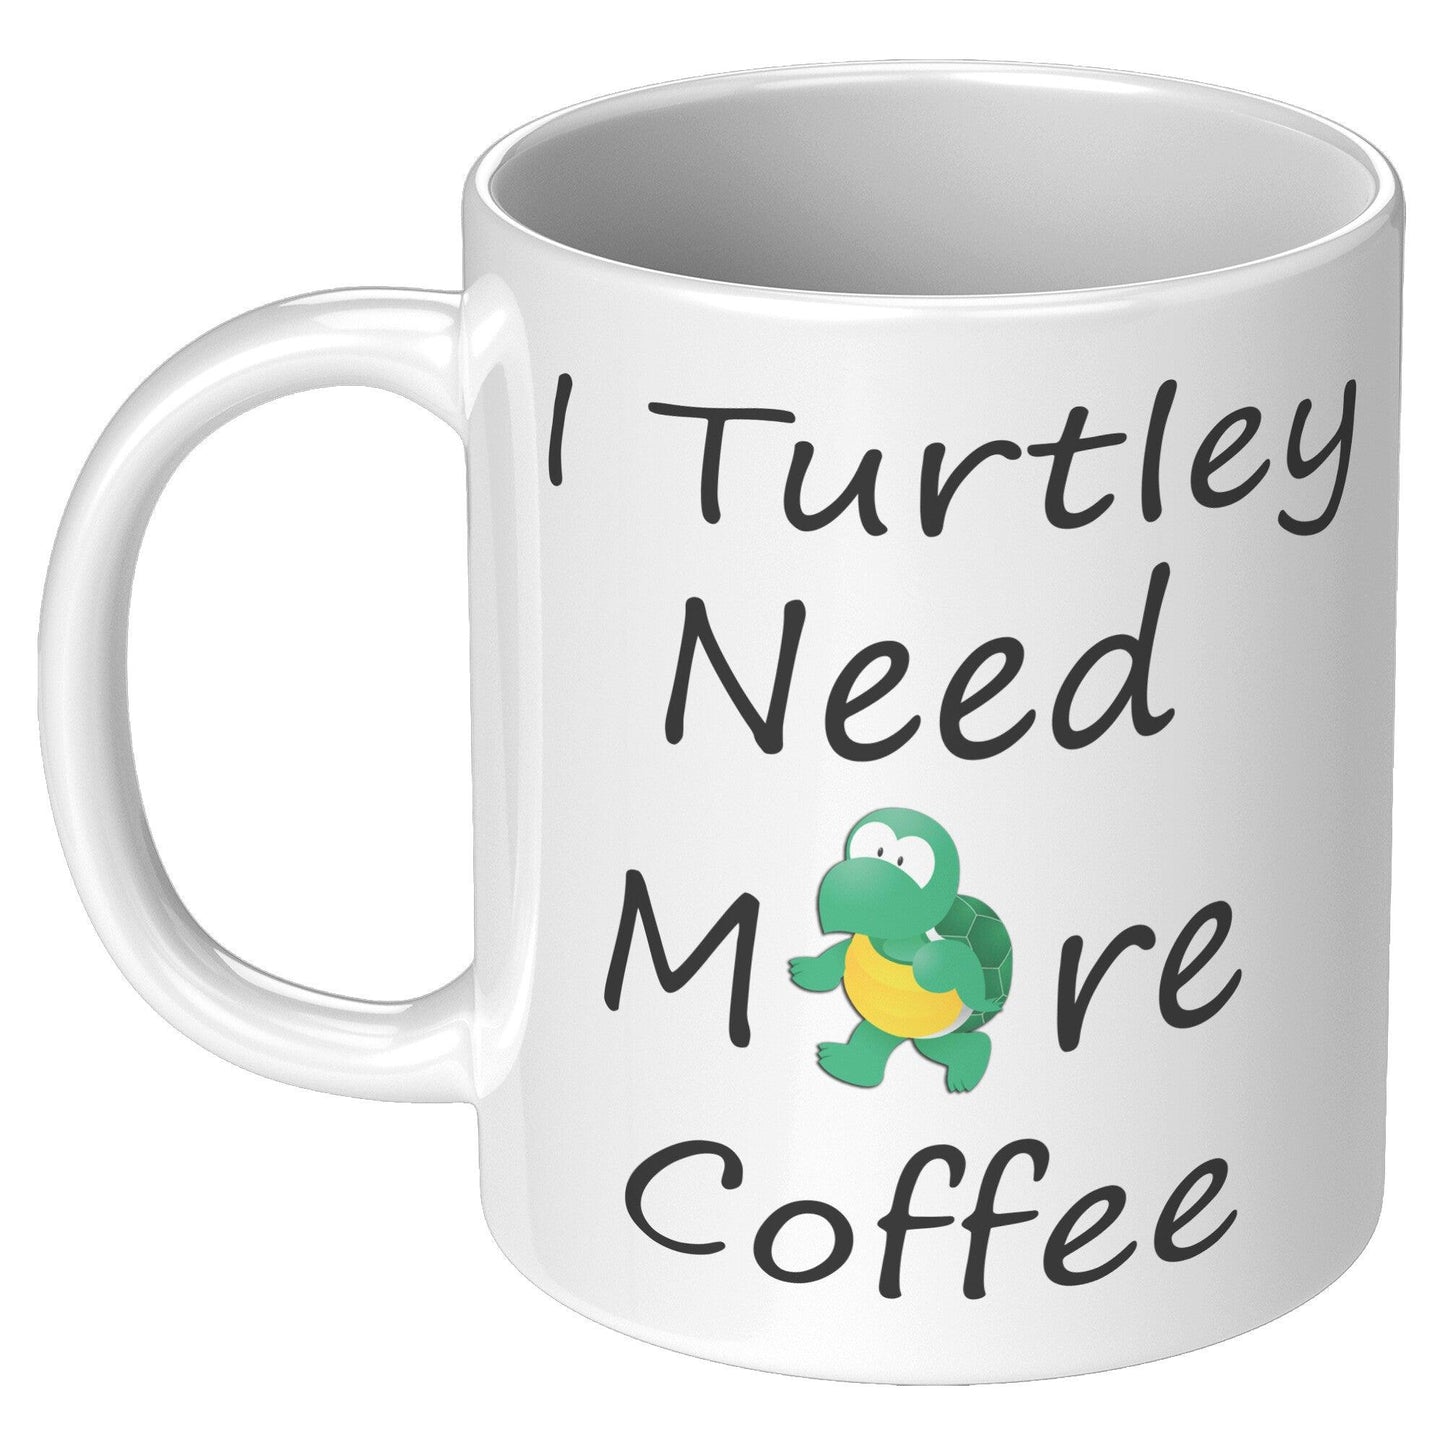 I Turtley Need More Coffee White Mug - TheGivenGet